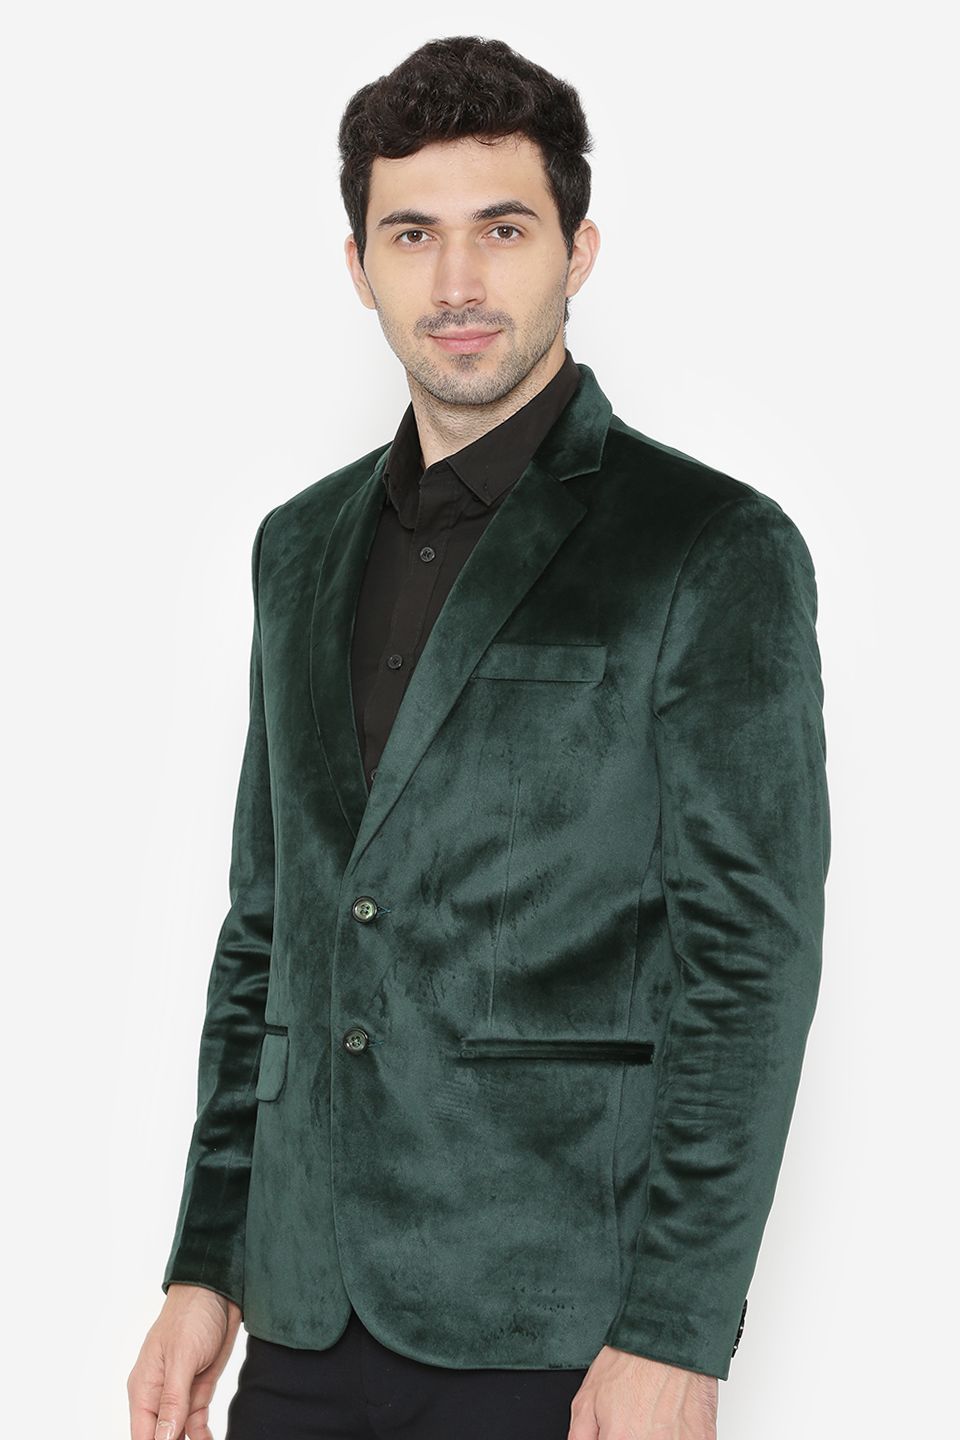 Cotton Velvet Green Blazers